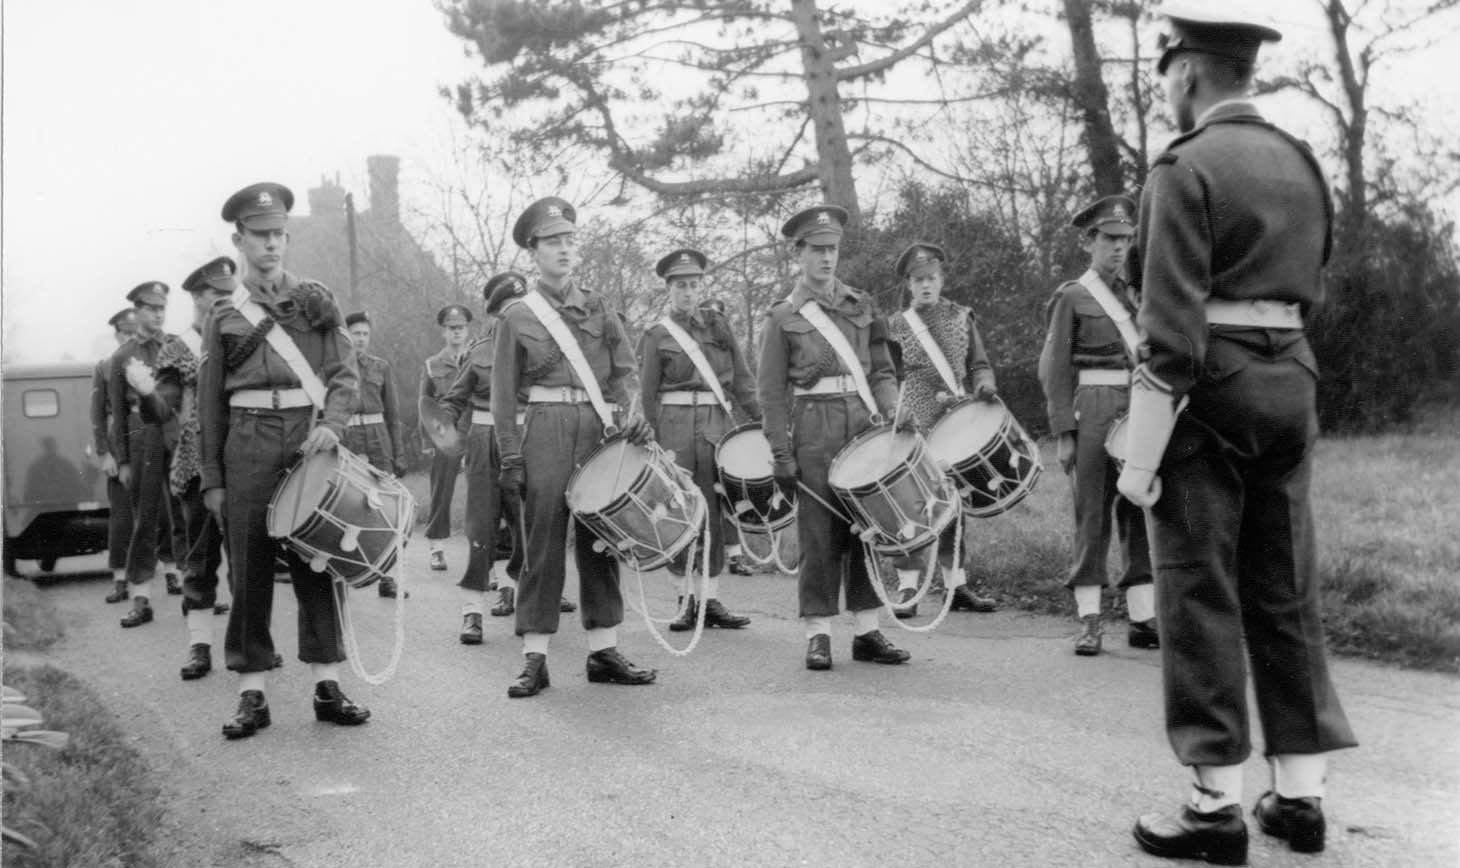 Band on parade - 1952